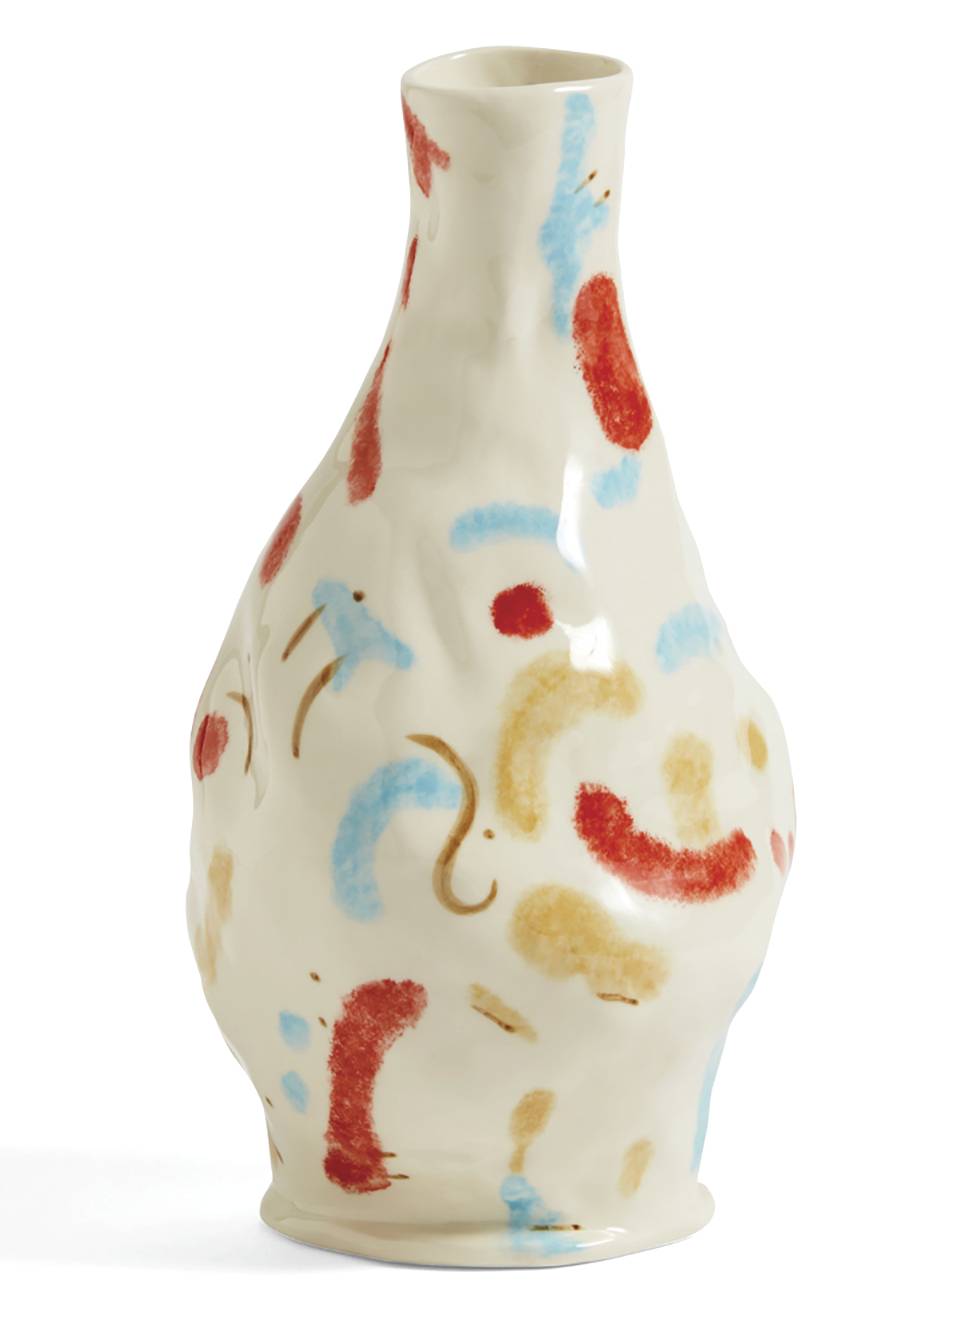 Jessica Hans for HAY vase in Miro Family